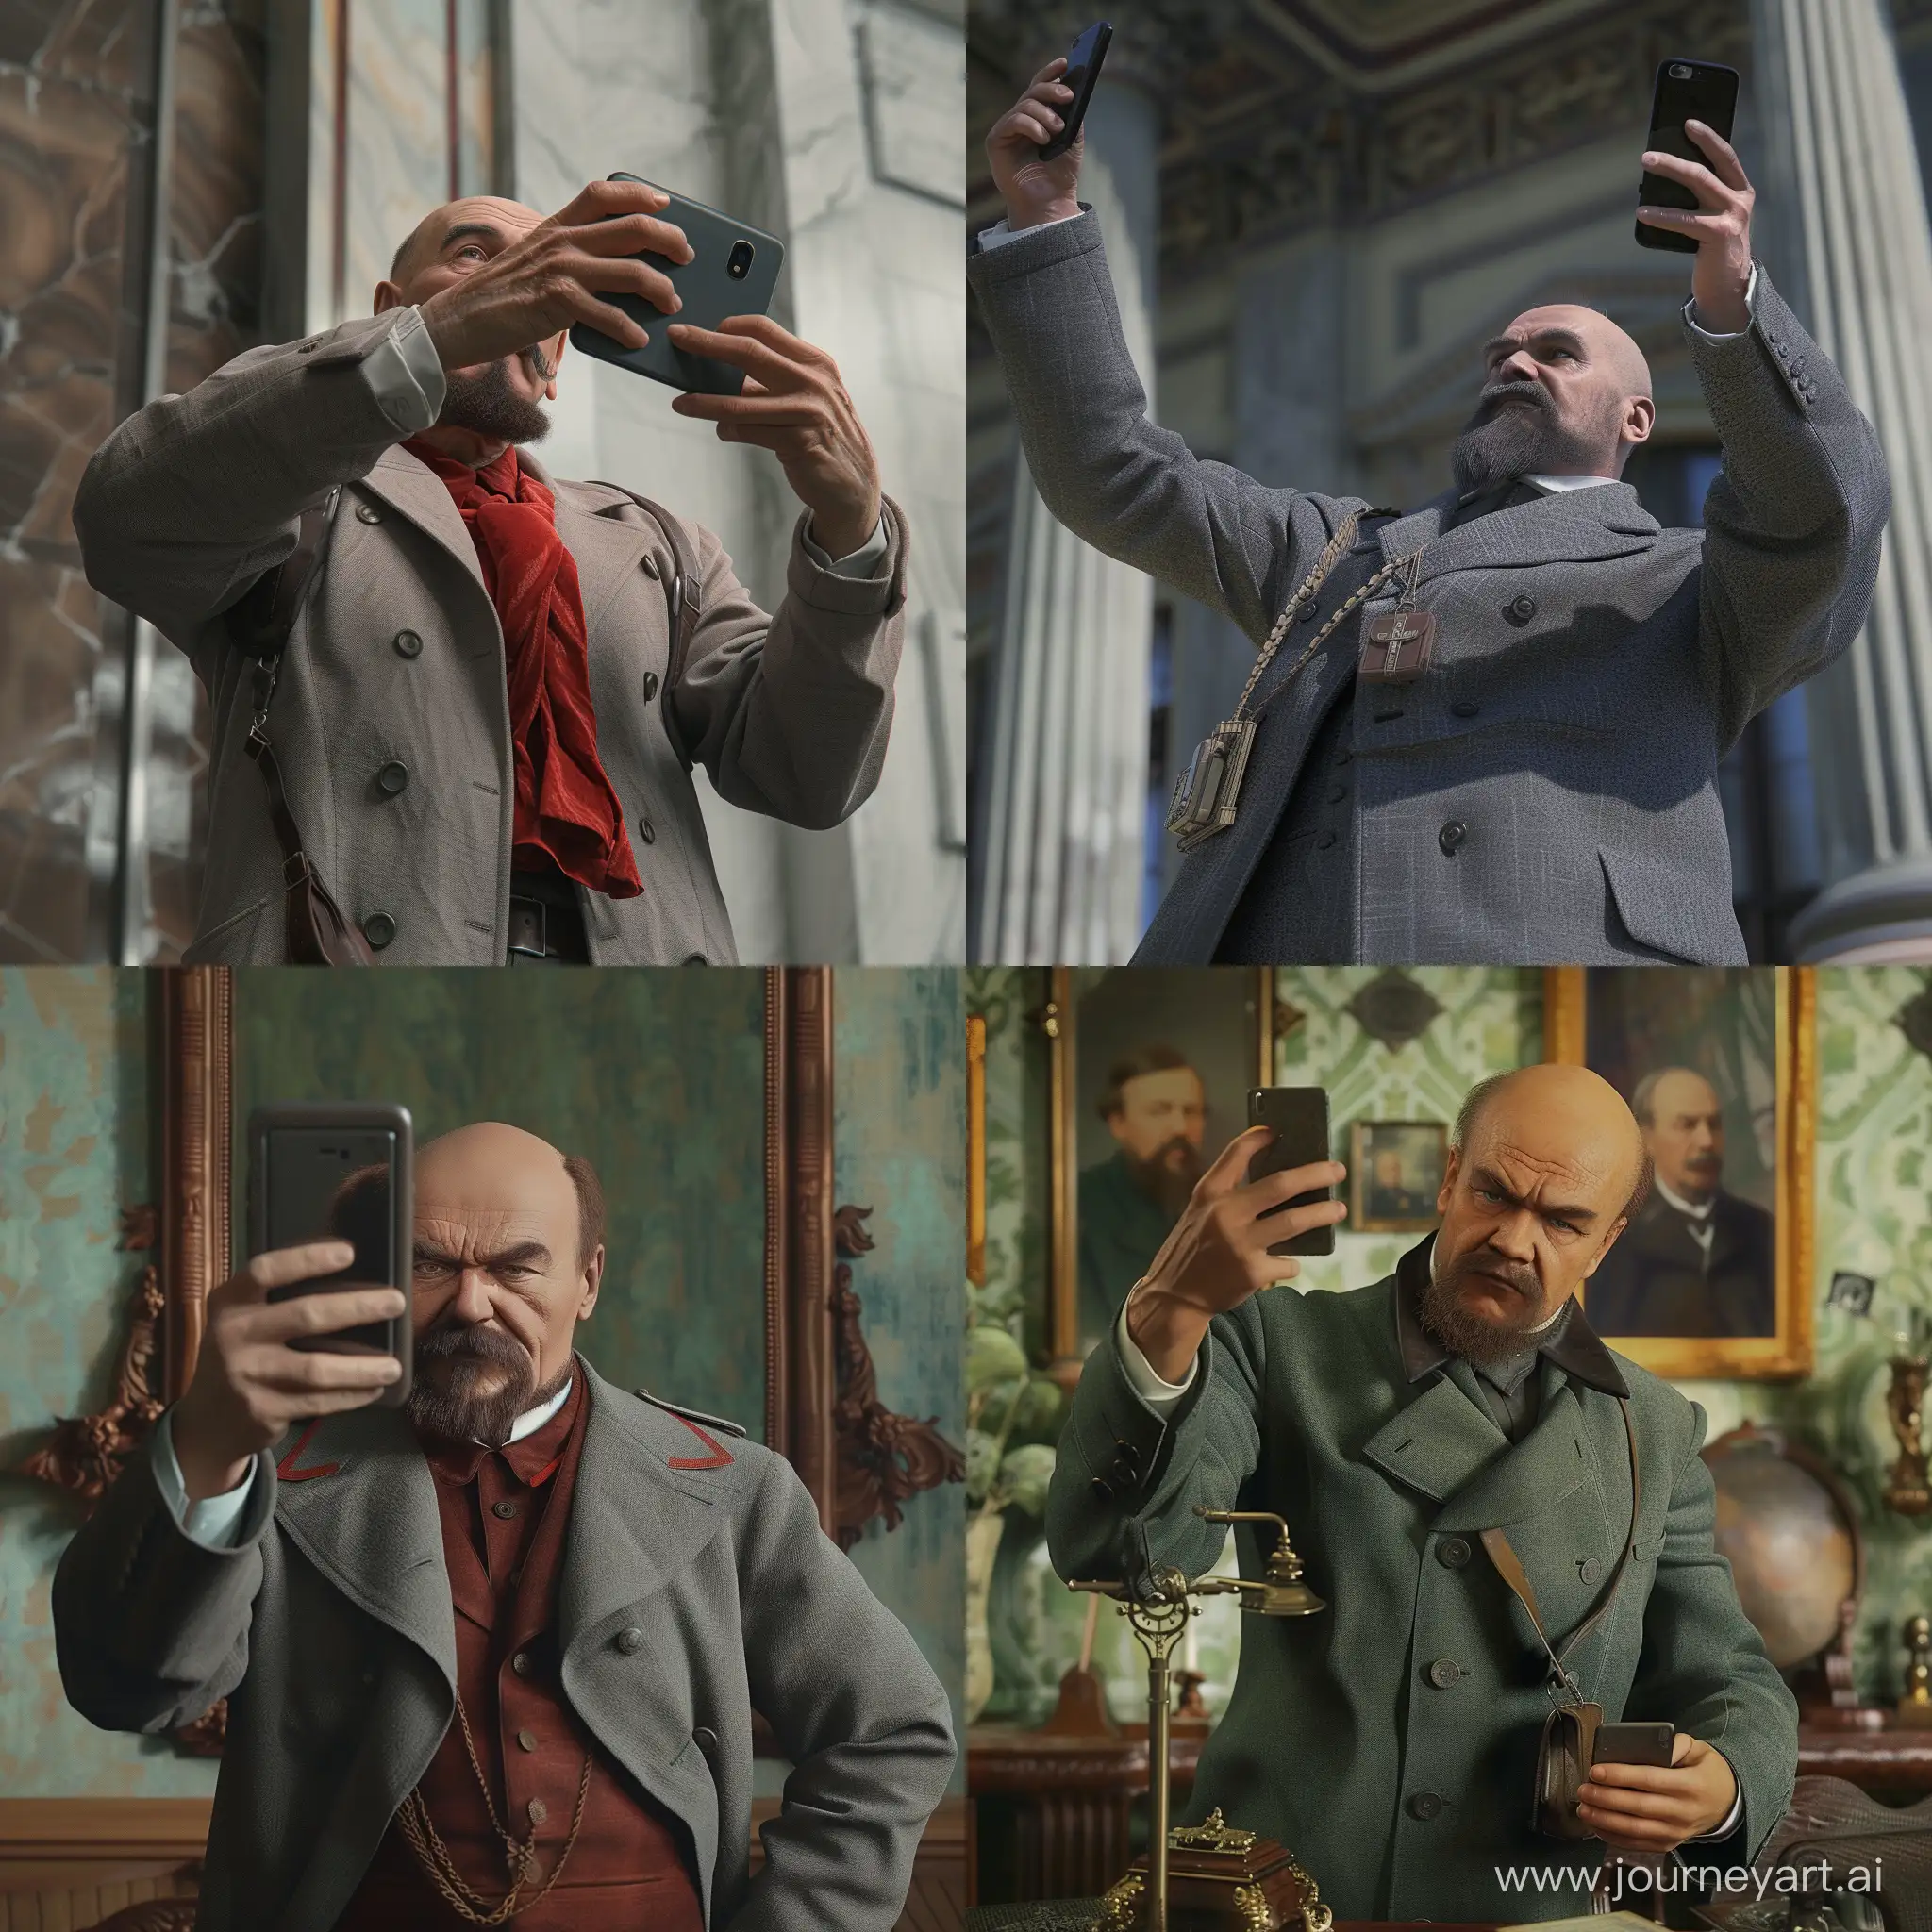 Photorealistic-Vladimir-Lenin-Taking-Selfies-with-Phone